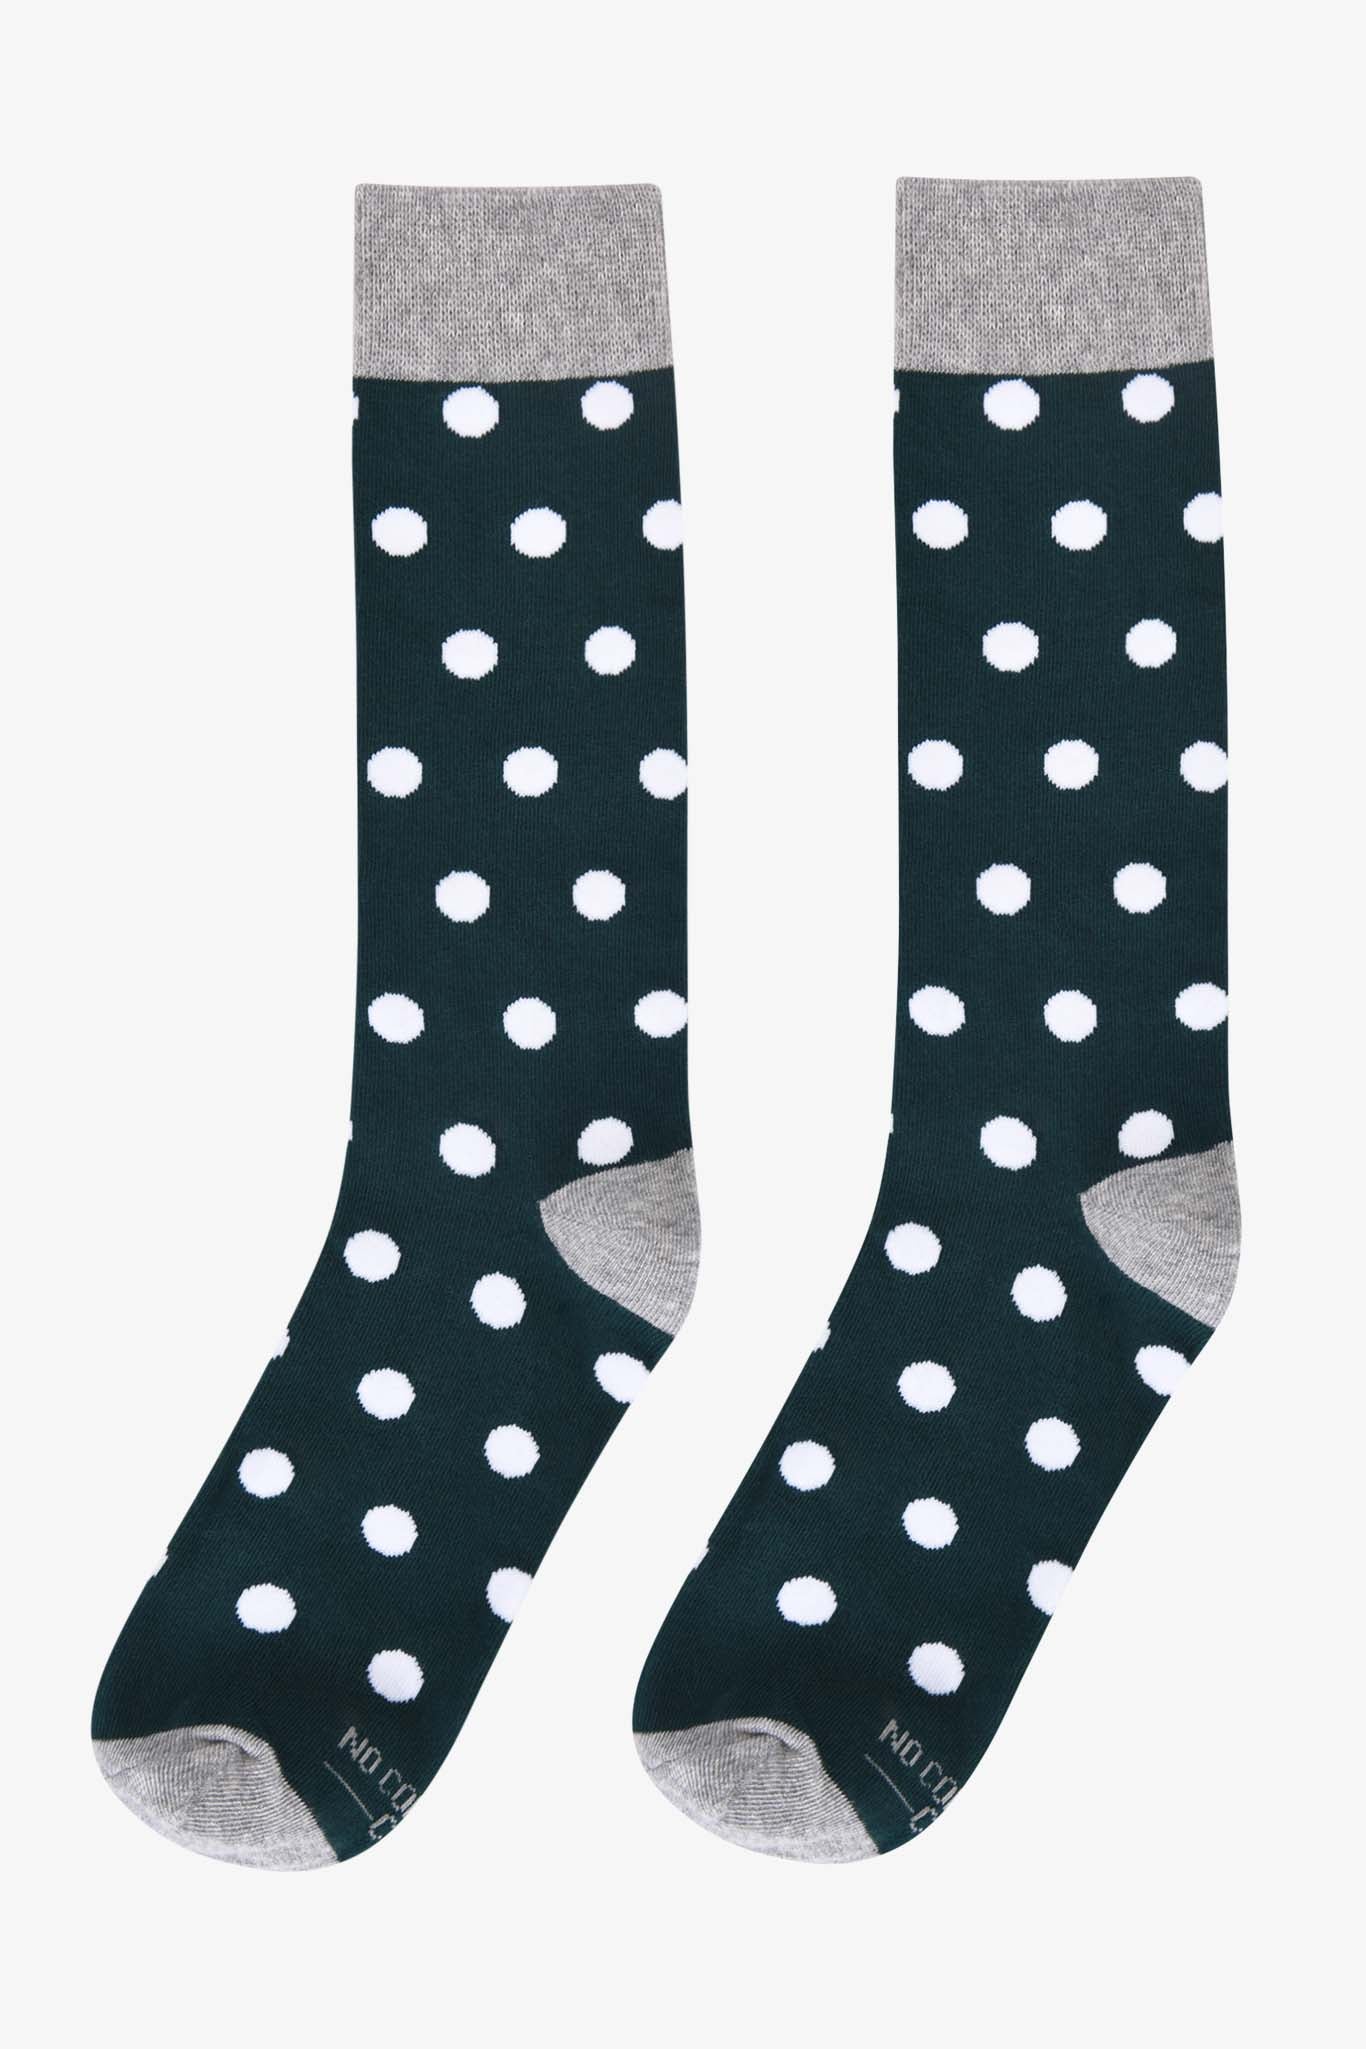 Polka Dot Groomsmen Socks By No Cold Feet - Emerald